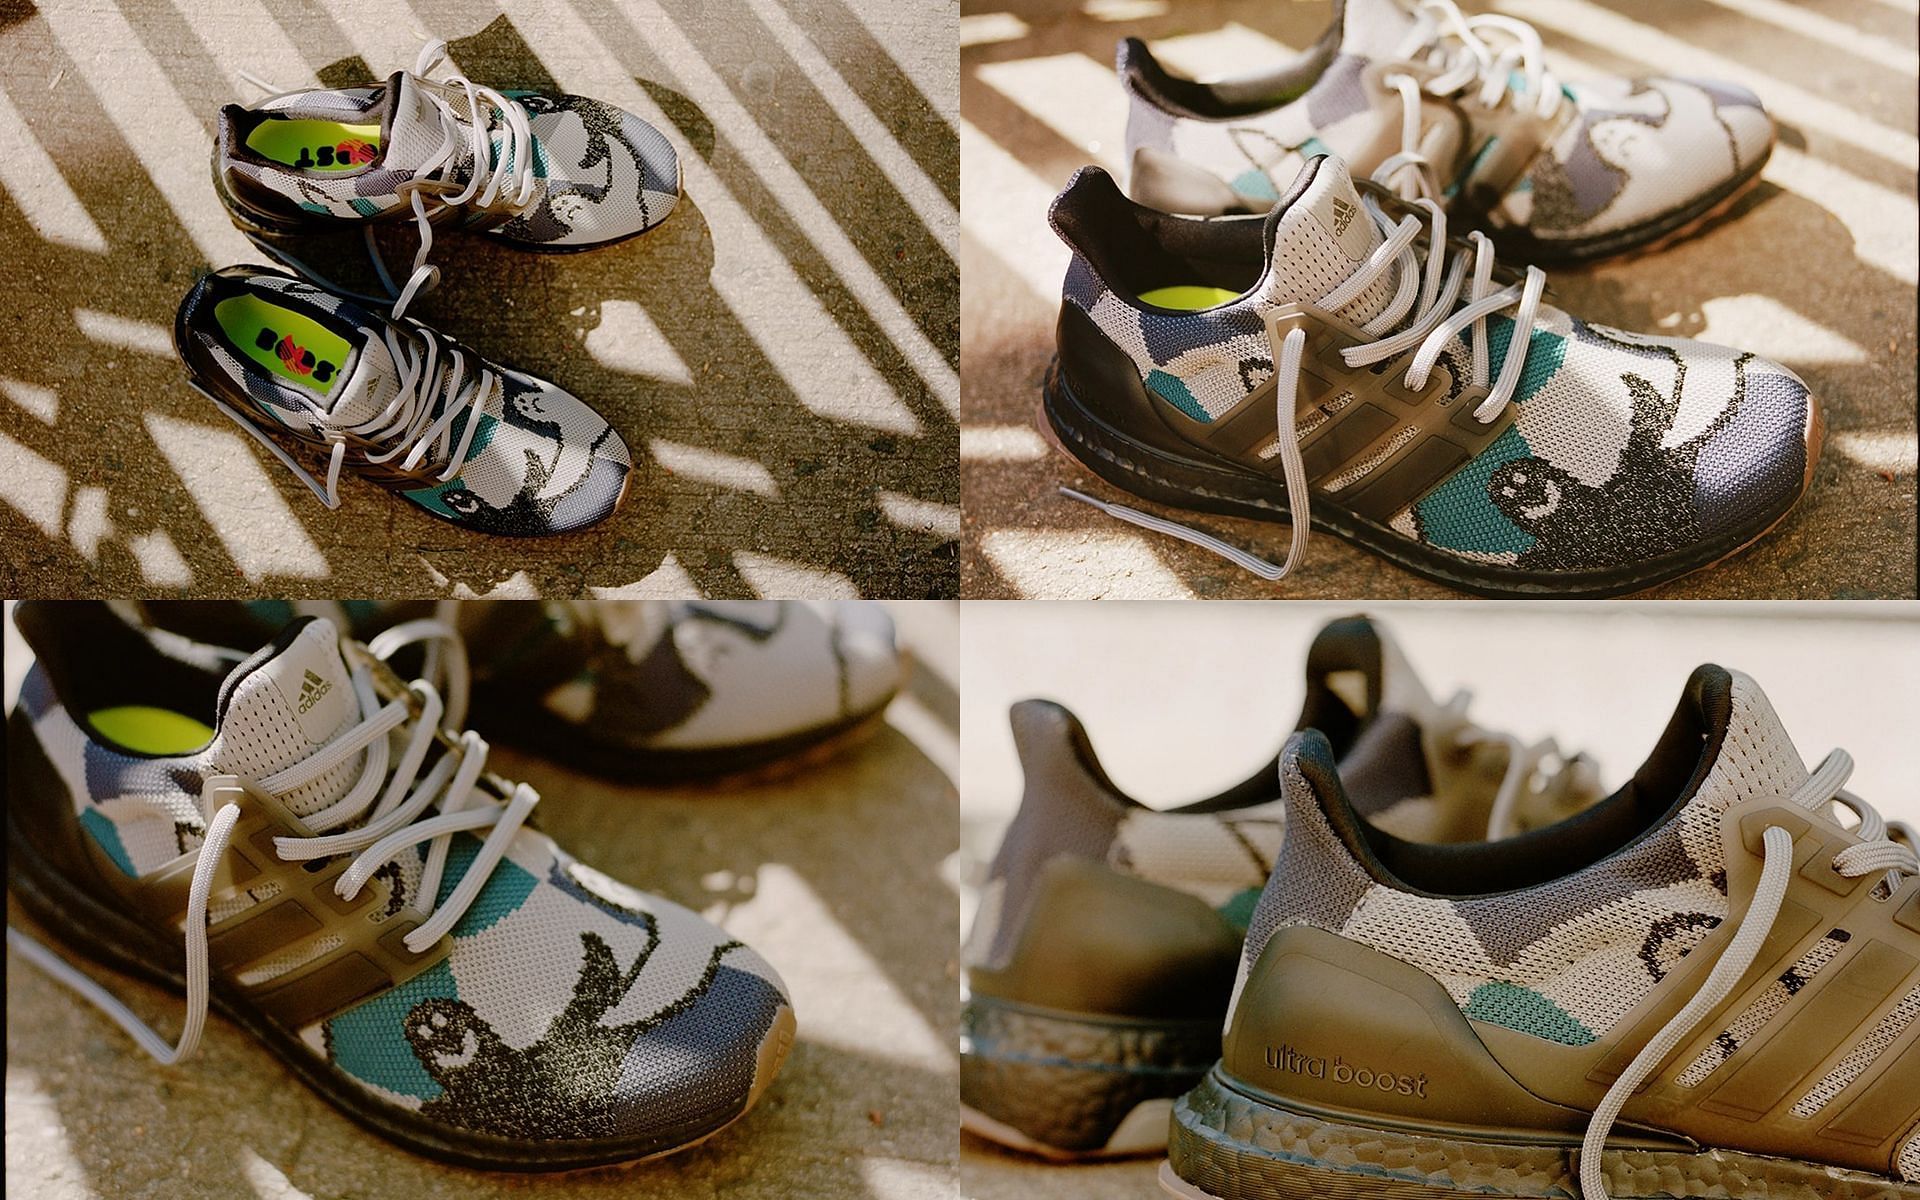 Upcoming adidas UltraBOOST DNA X Mark Gonzales sneakers (Image via Sportskeeda)